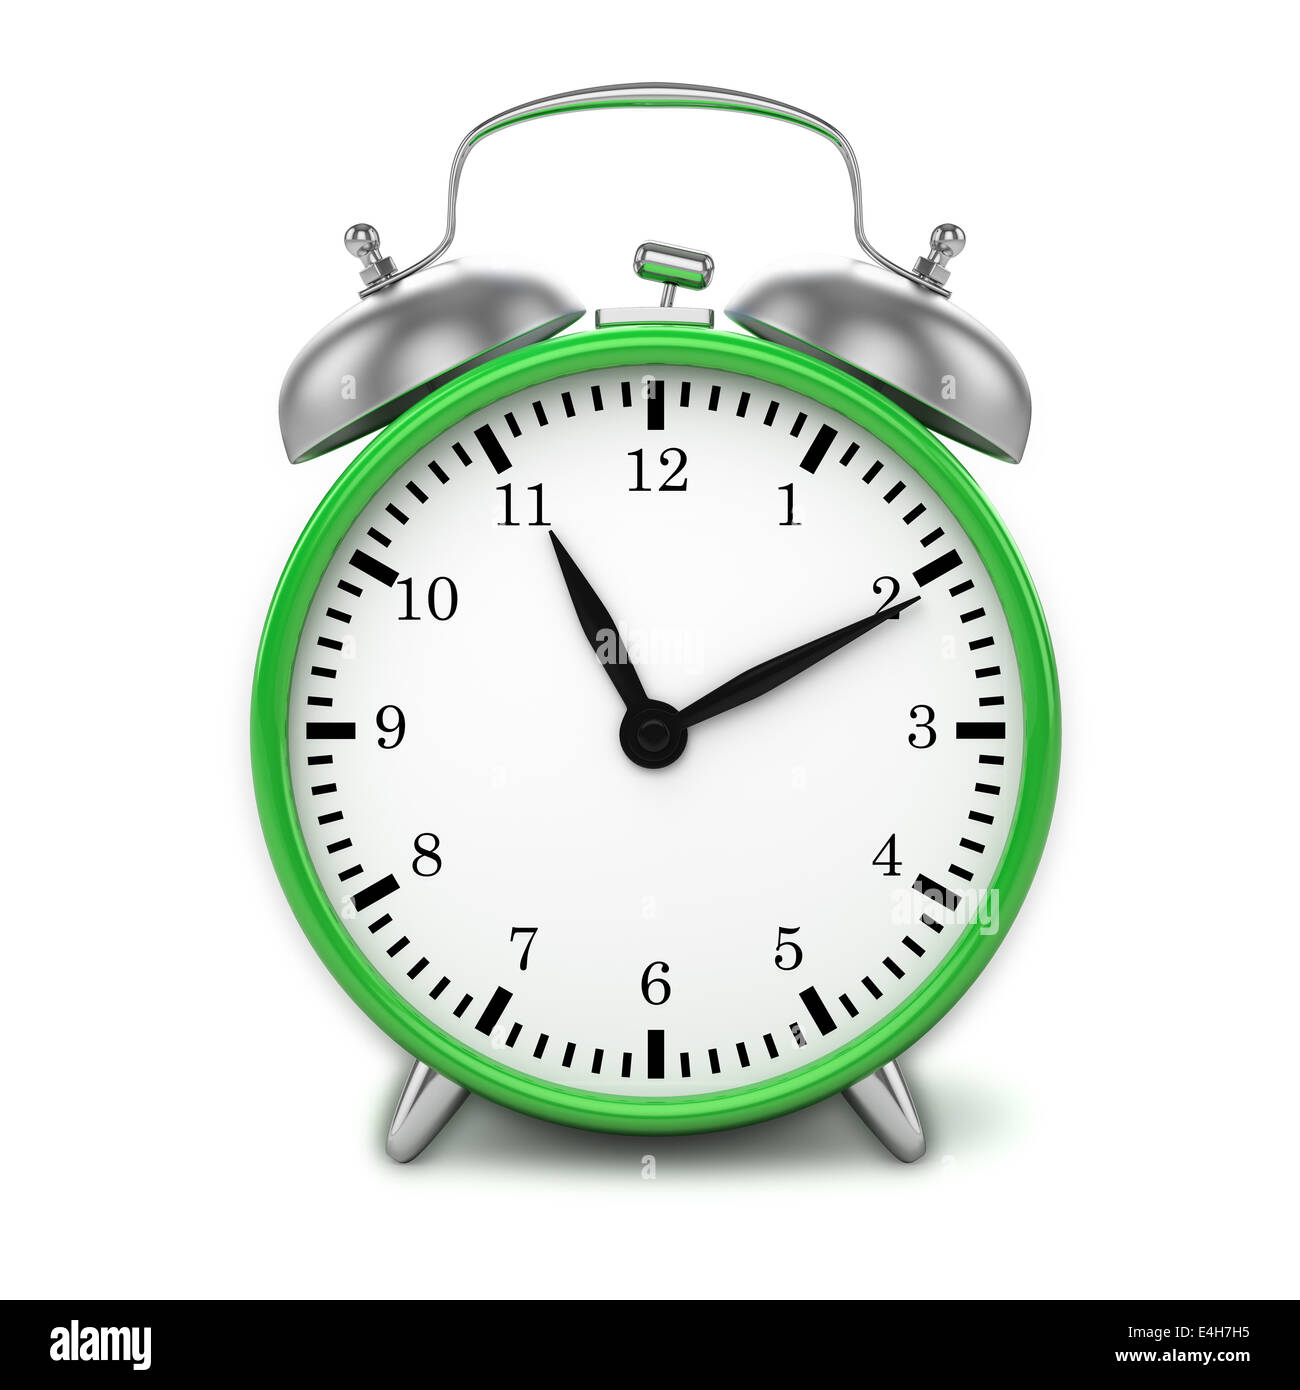 Green retro styled classic alarm clock isolated on white Stock Photo